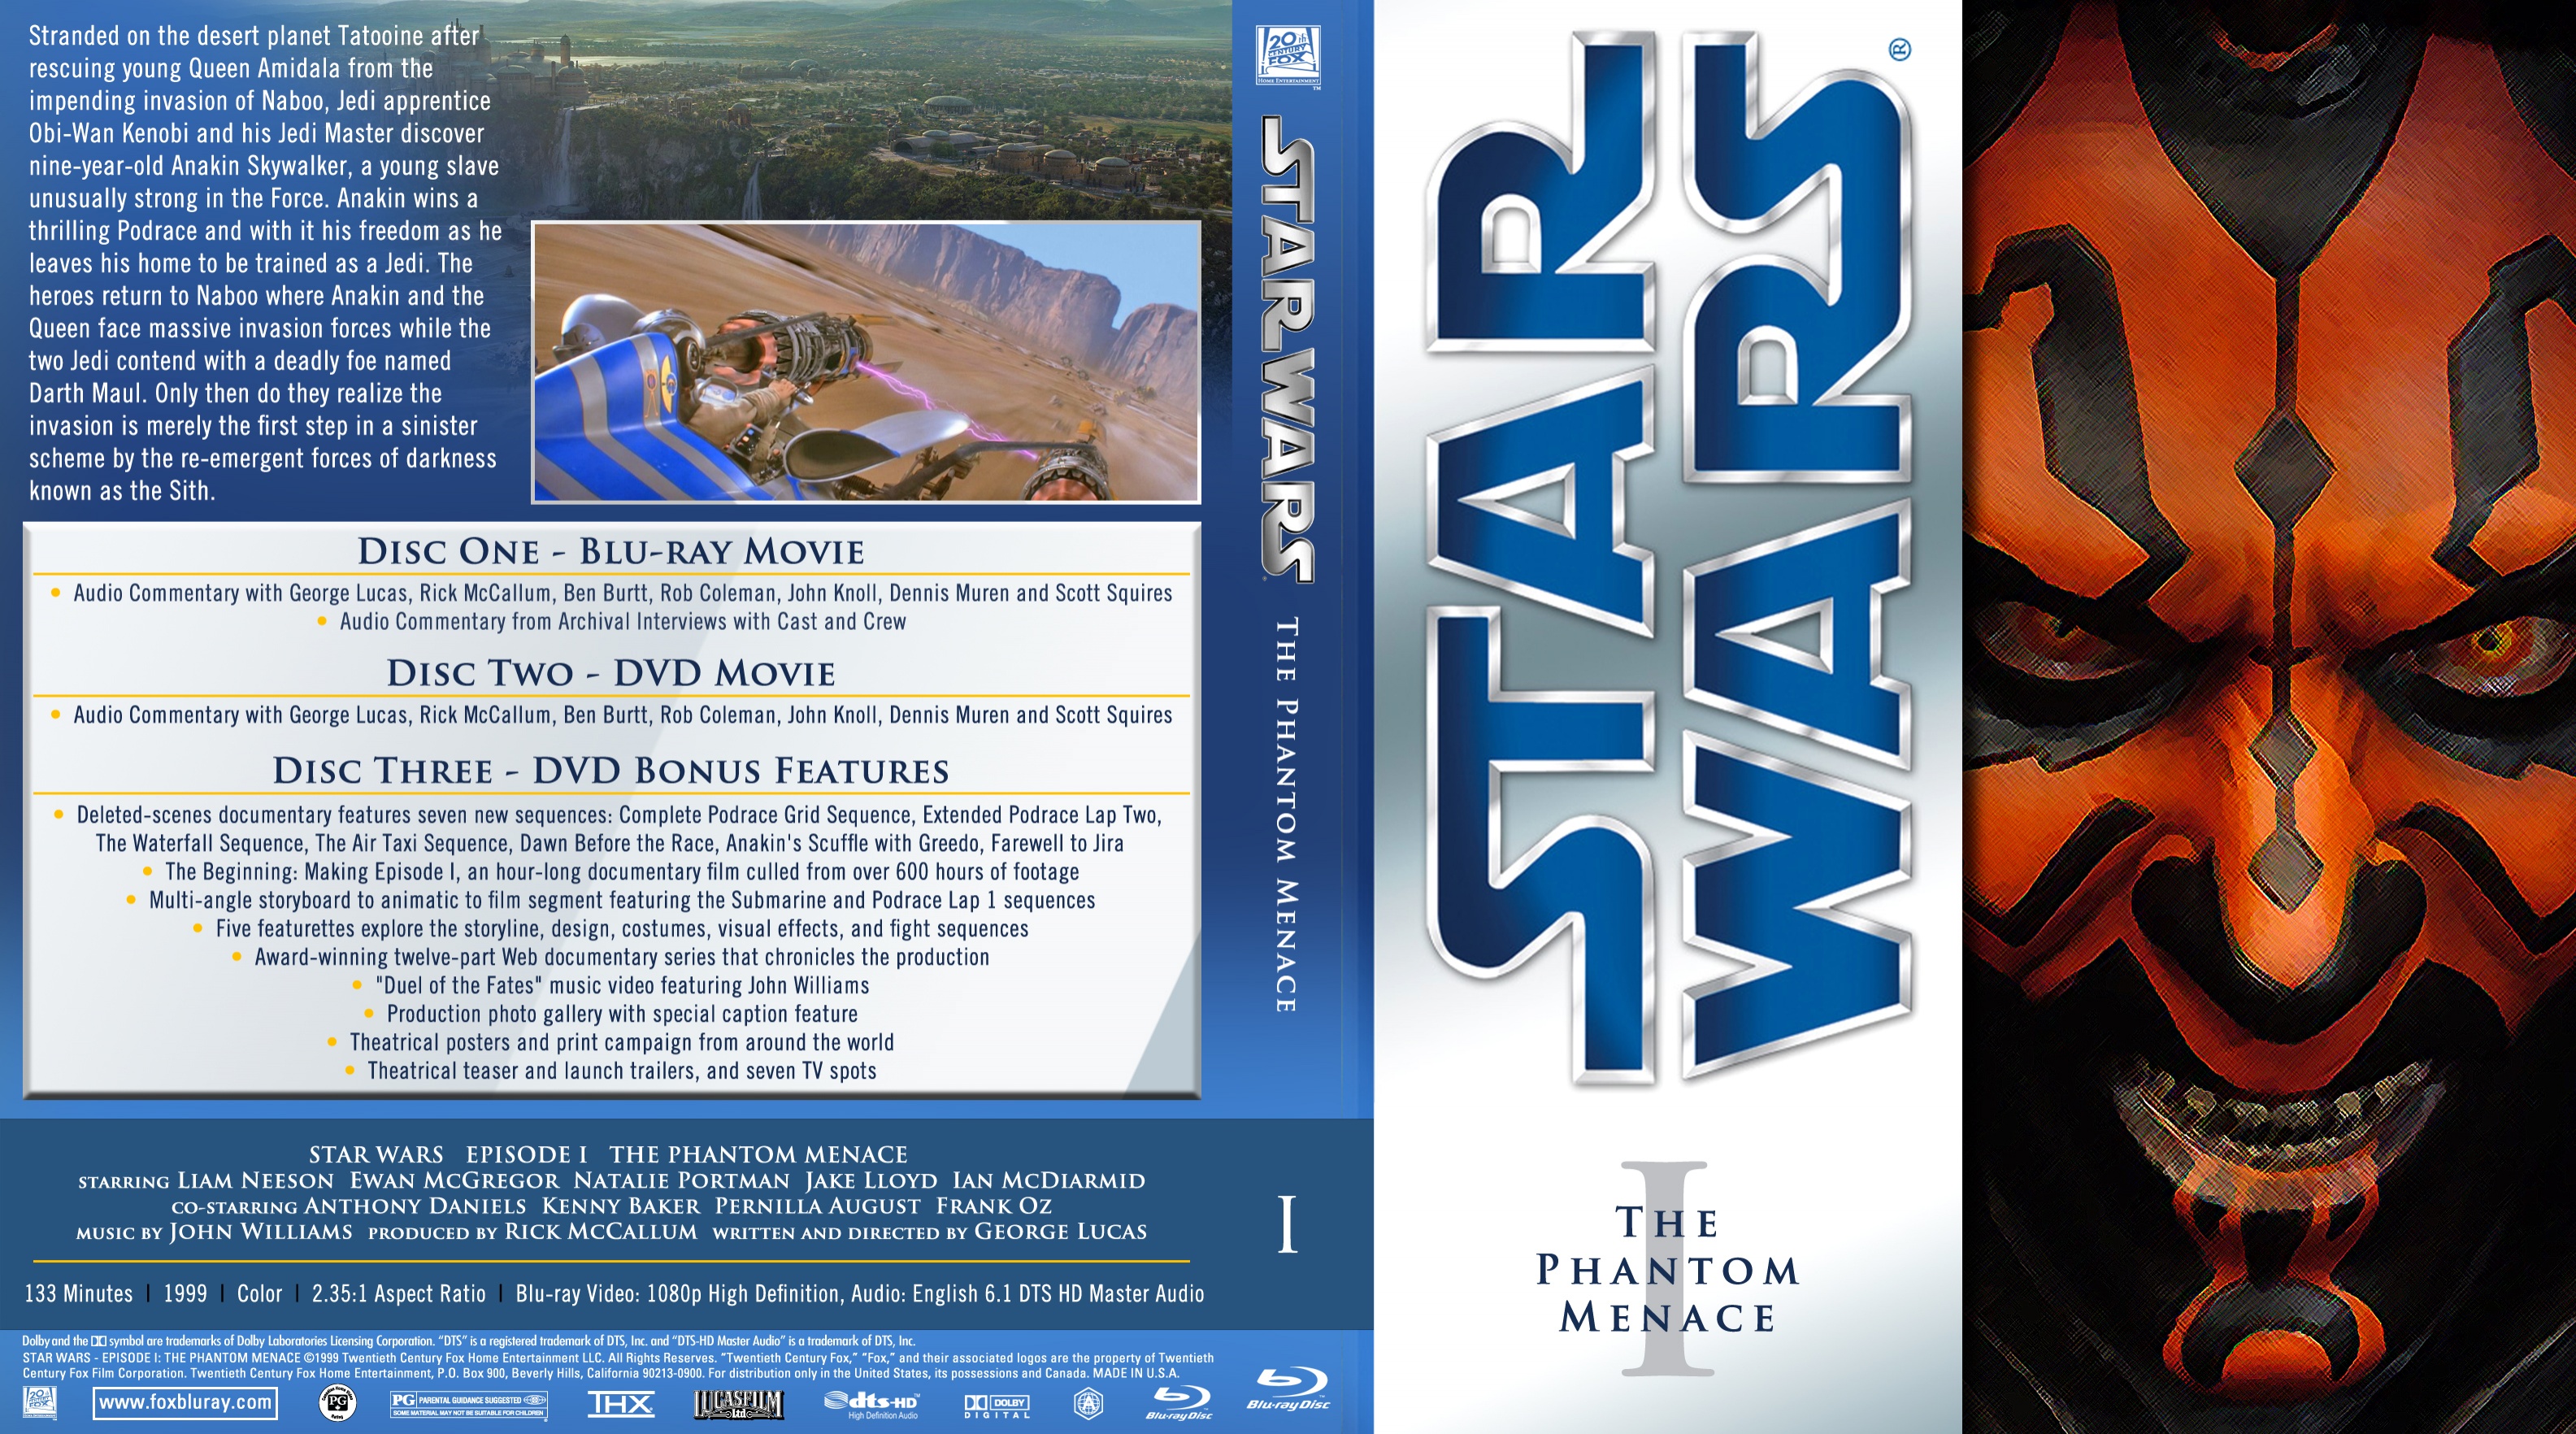 Star Wars I: The Phantom Menace box cover